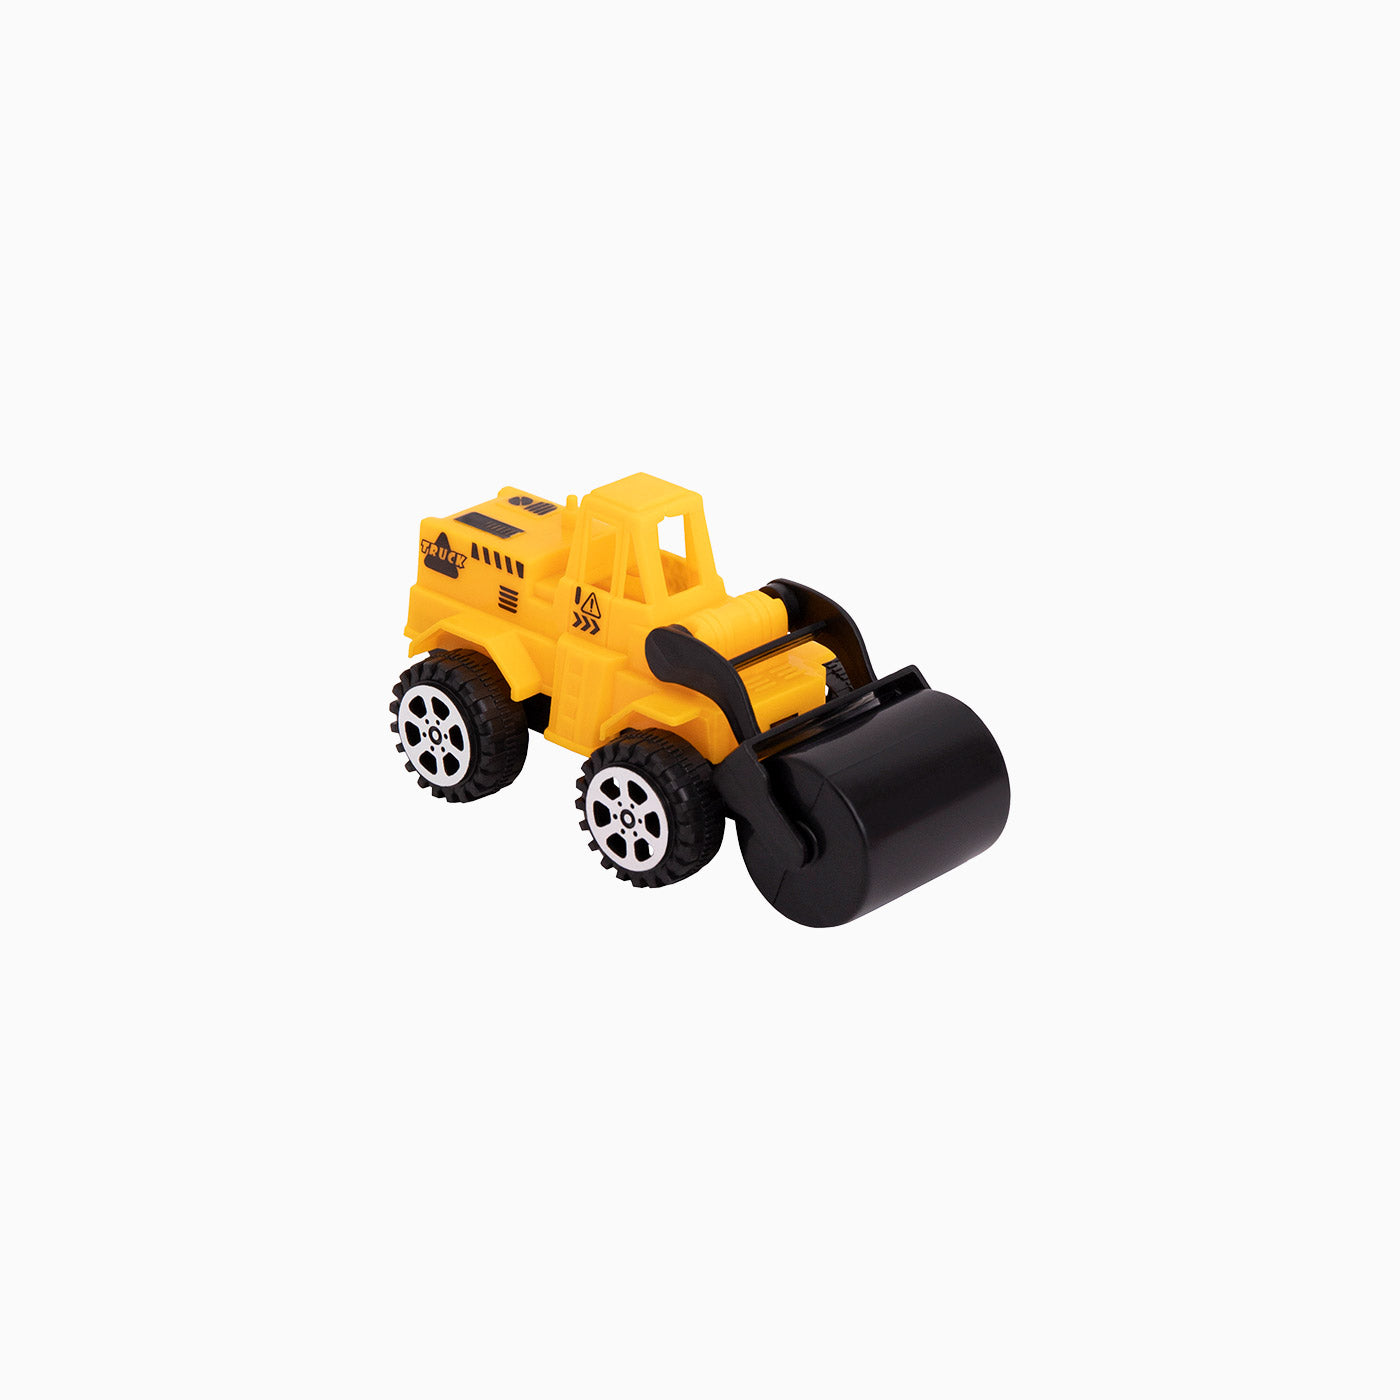 Construction spotter crane toy